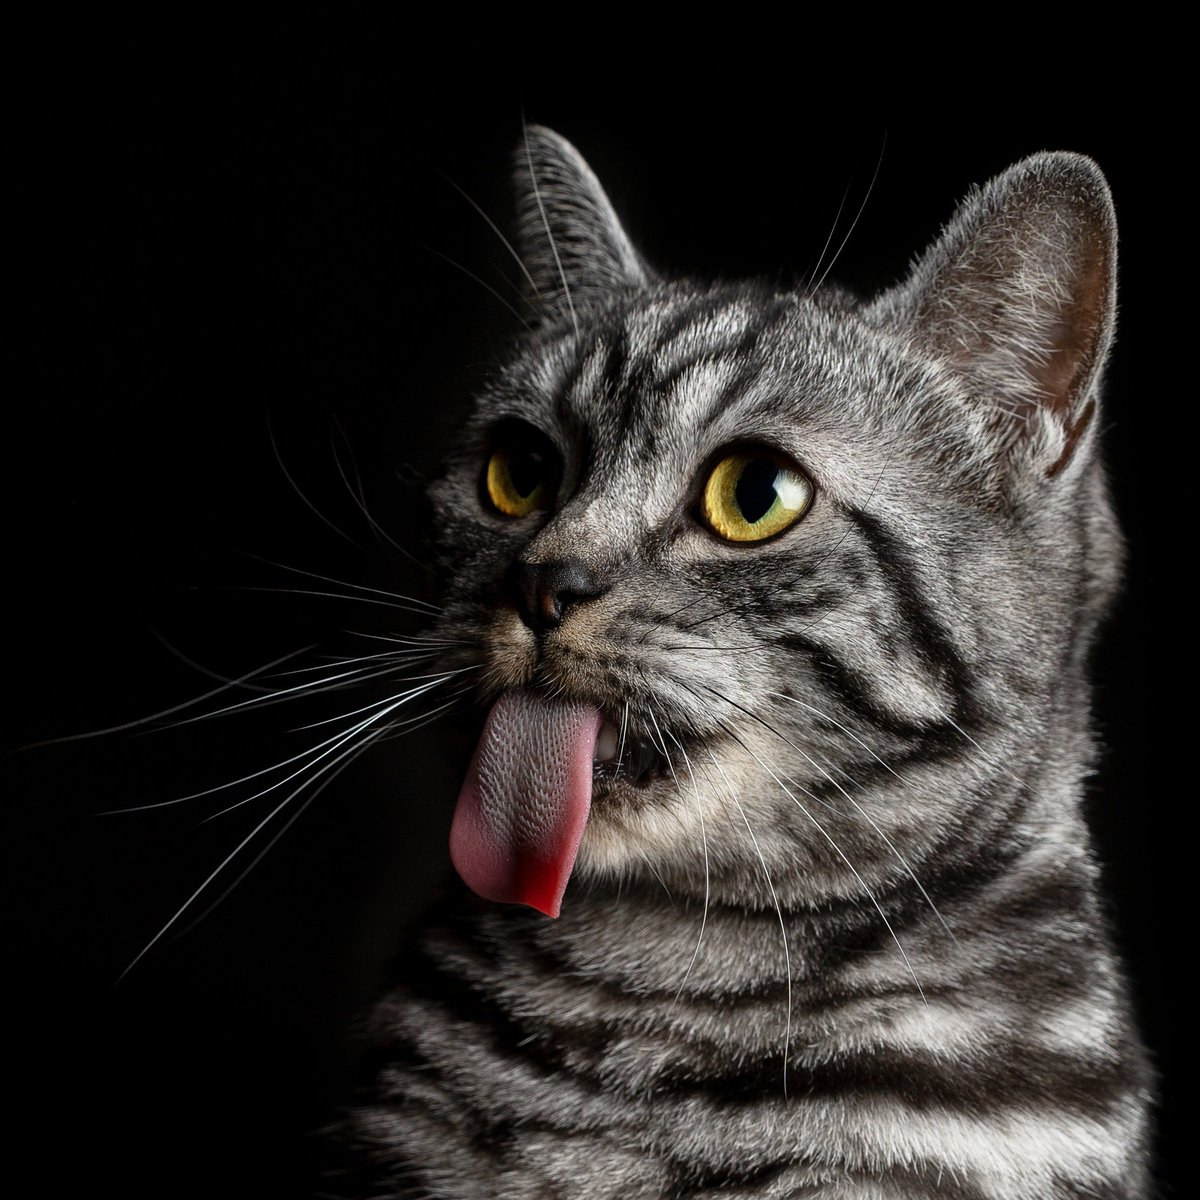 Meomwy says I have a very long tongue.  😝

Is my tongue short or long?

What do you think? 🤪[Balou].
.
.
.
#stayathome #stayhome #wirbleibenzuhause 
#neo_balou #bkh #bsh #bshkitten #bshcat #britishshorthairs #britischkurzhaar #britishshorthairtabby #silvertabby #CatsOfTwitter